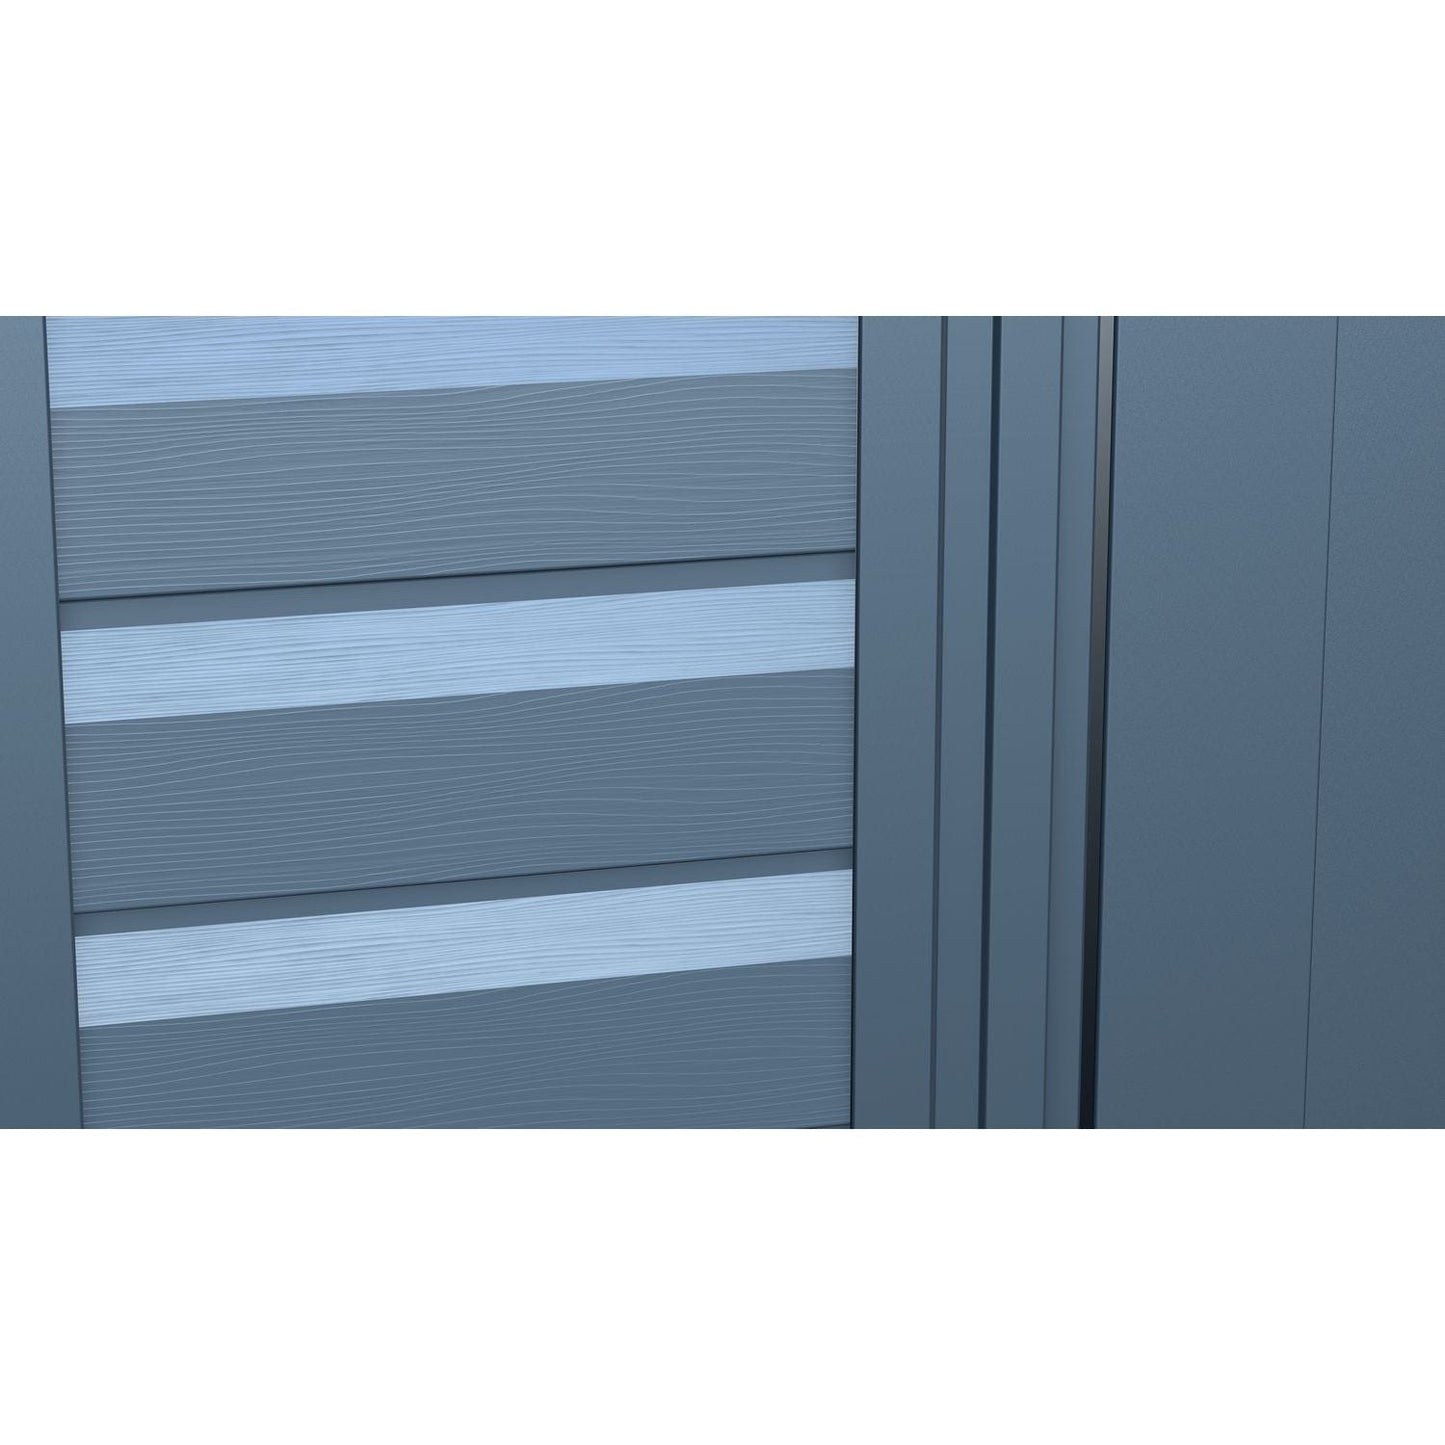 Arrow Sheds & Storage Buildings Arrow | Select Gable Roof Steel Storage Shed, 6x5 ft., Blue Grey SCG65BG